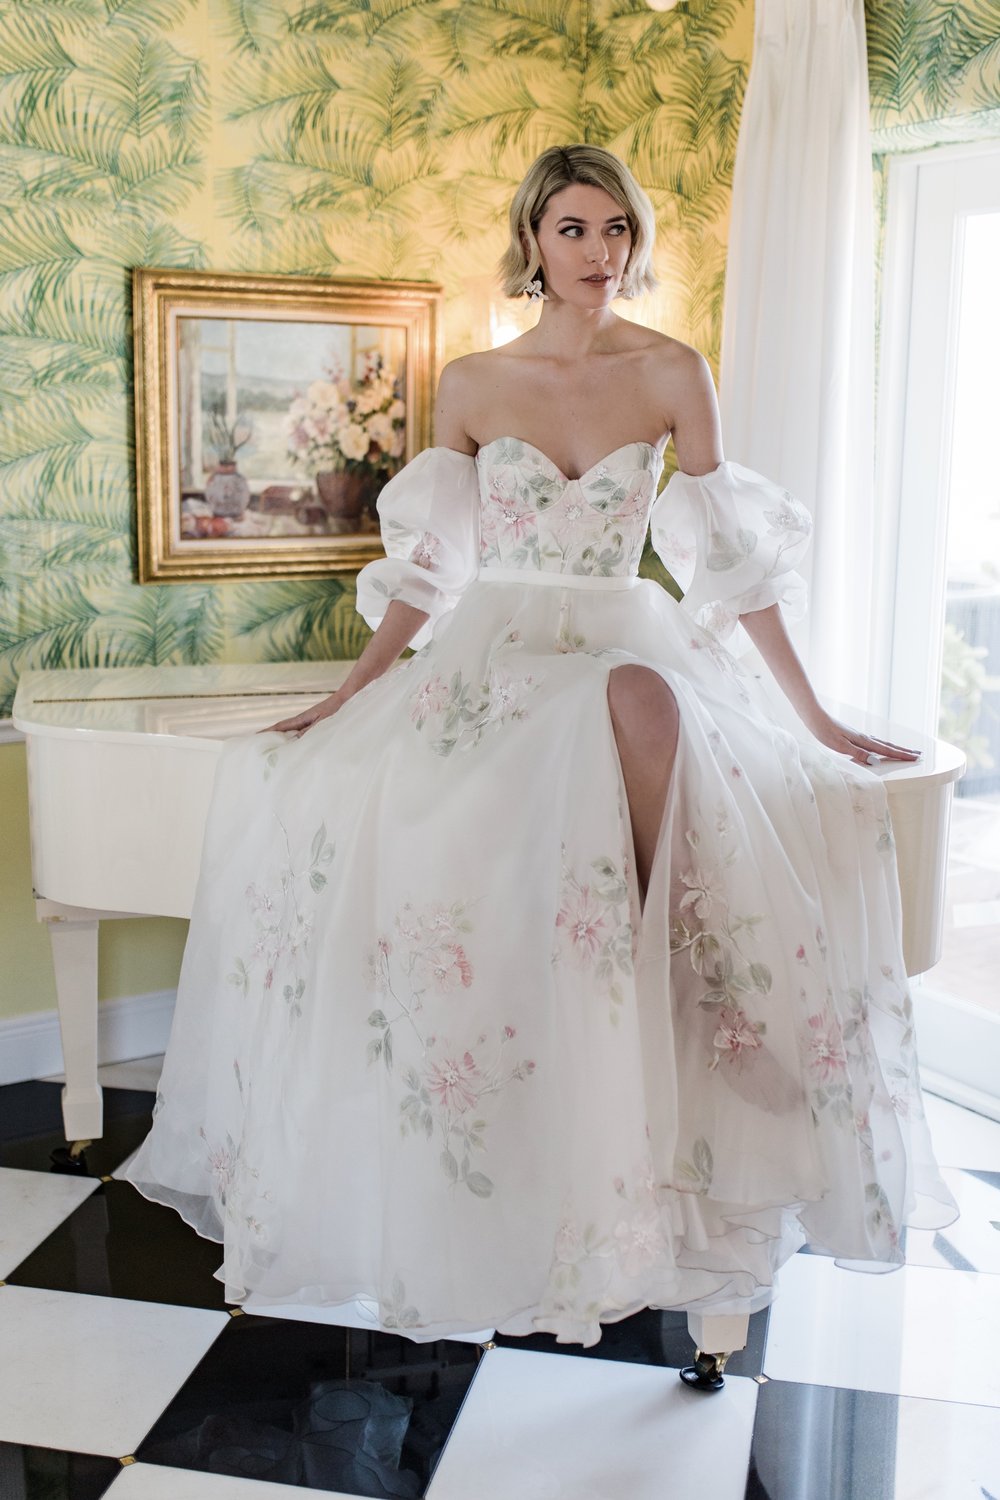 Jersey Shore Angelina Pivarnick Goes Wedding Dress Shopping